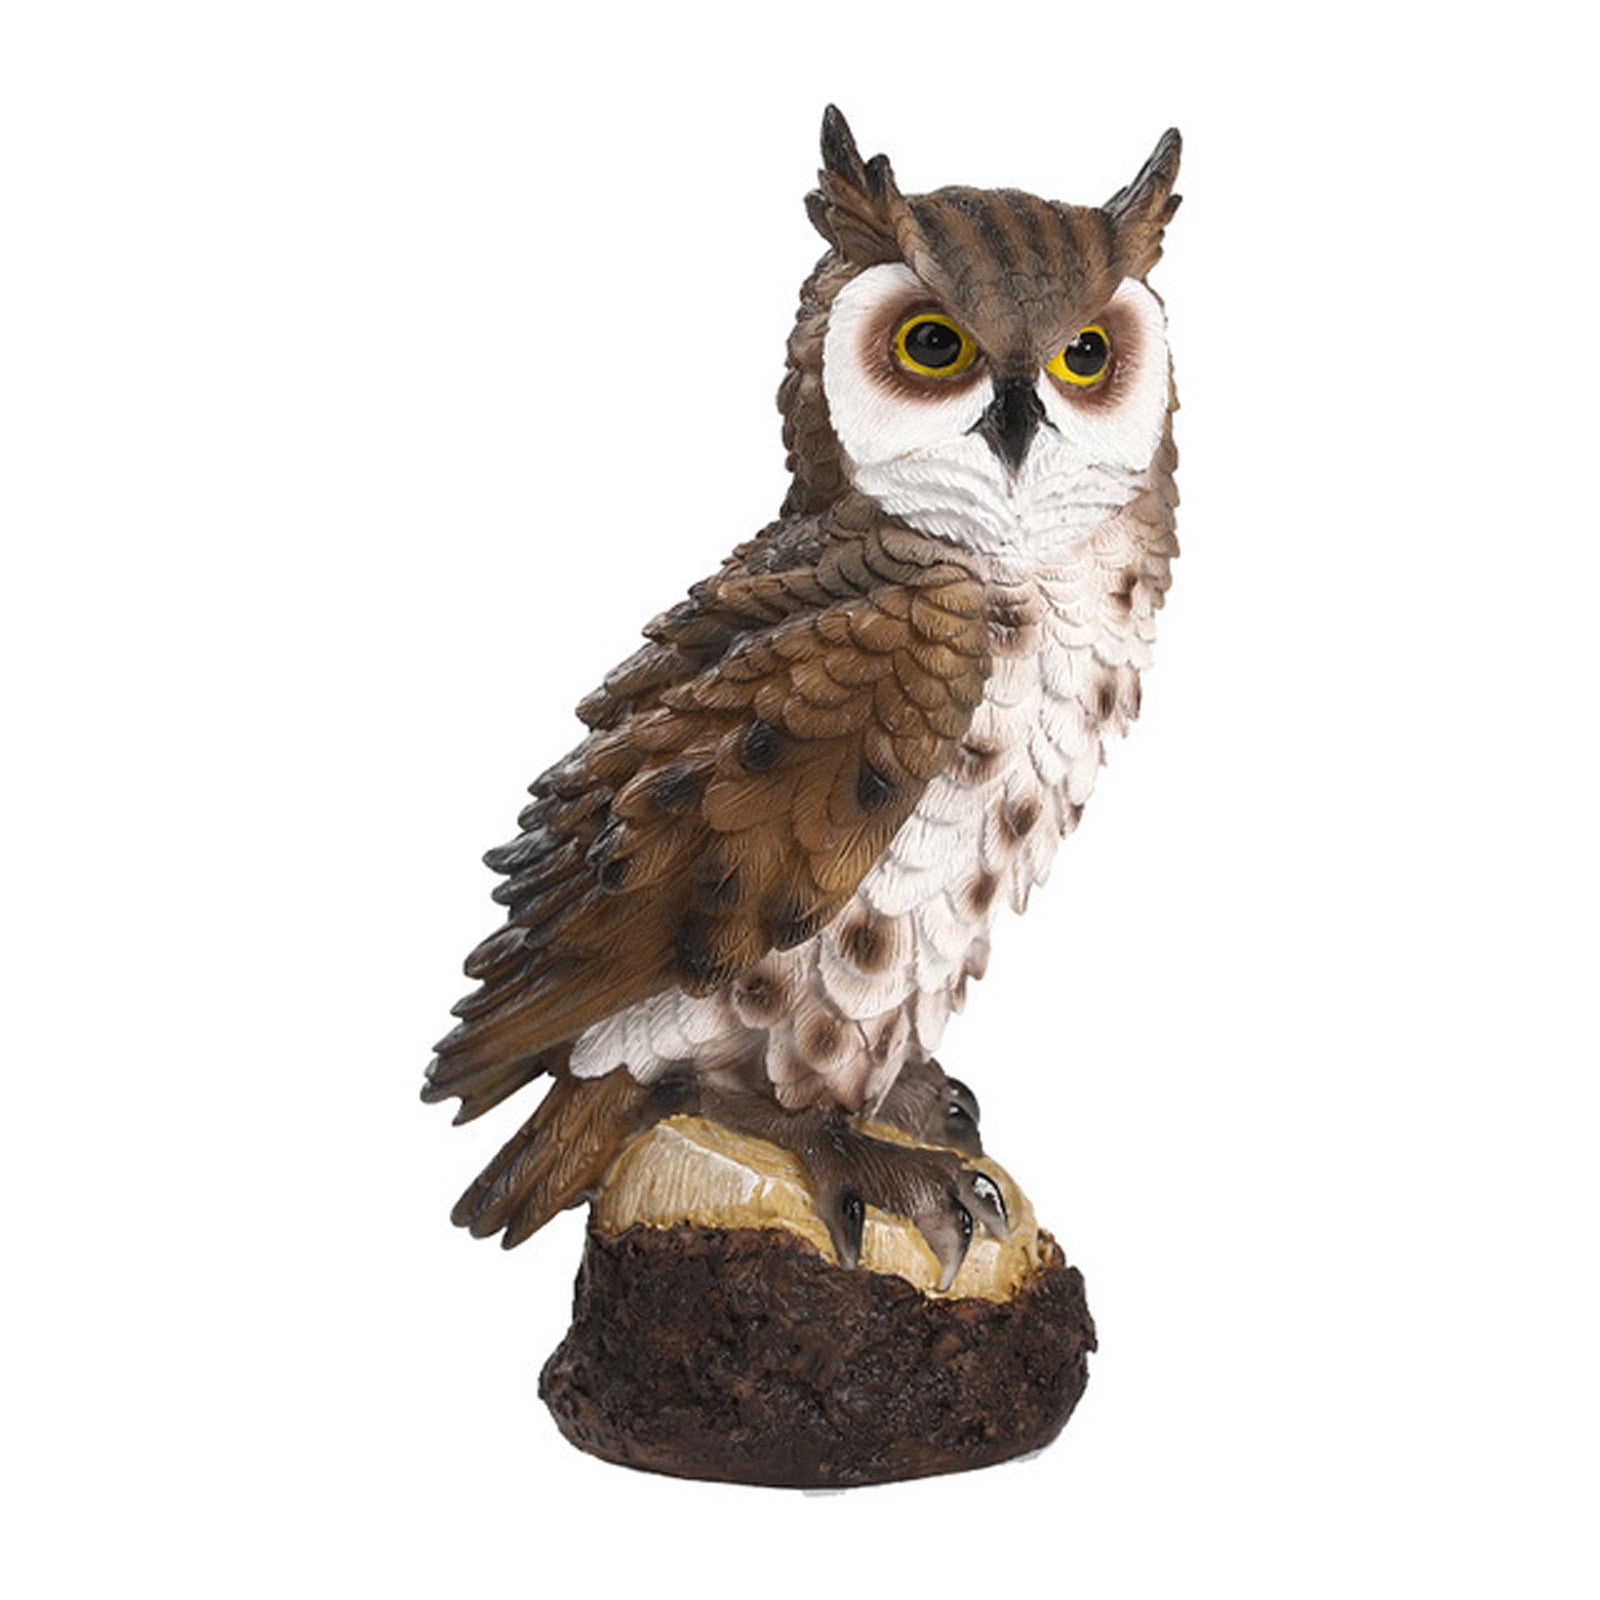 Figurine Owl Statue Decor Ornaments Outdoor Garden Home Resin Crafts ...